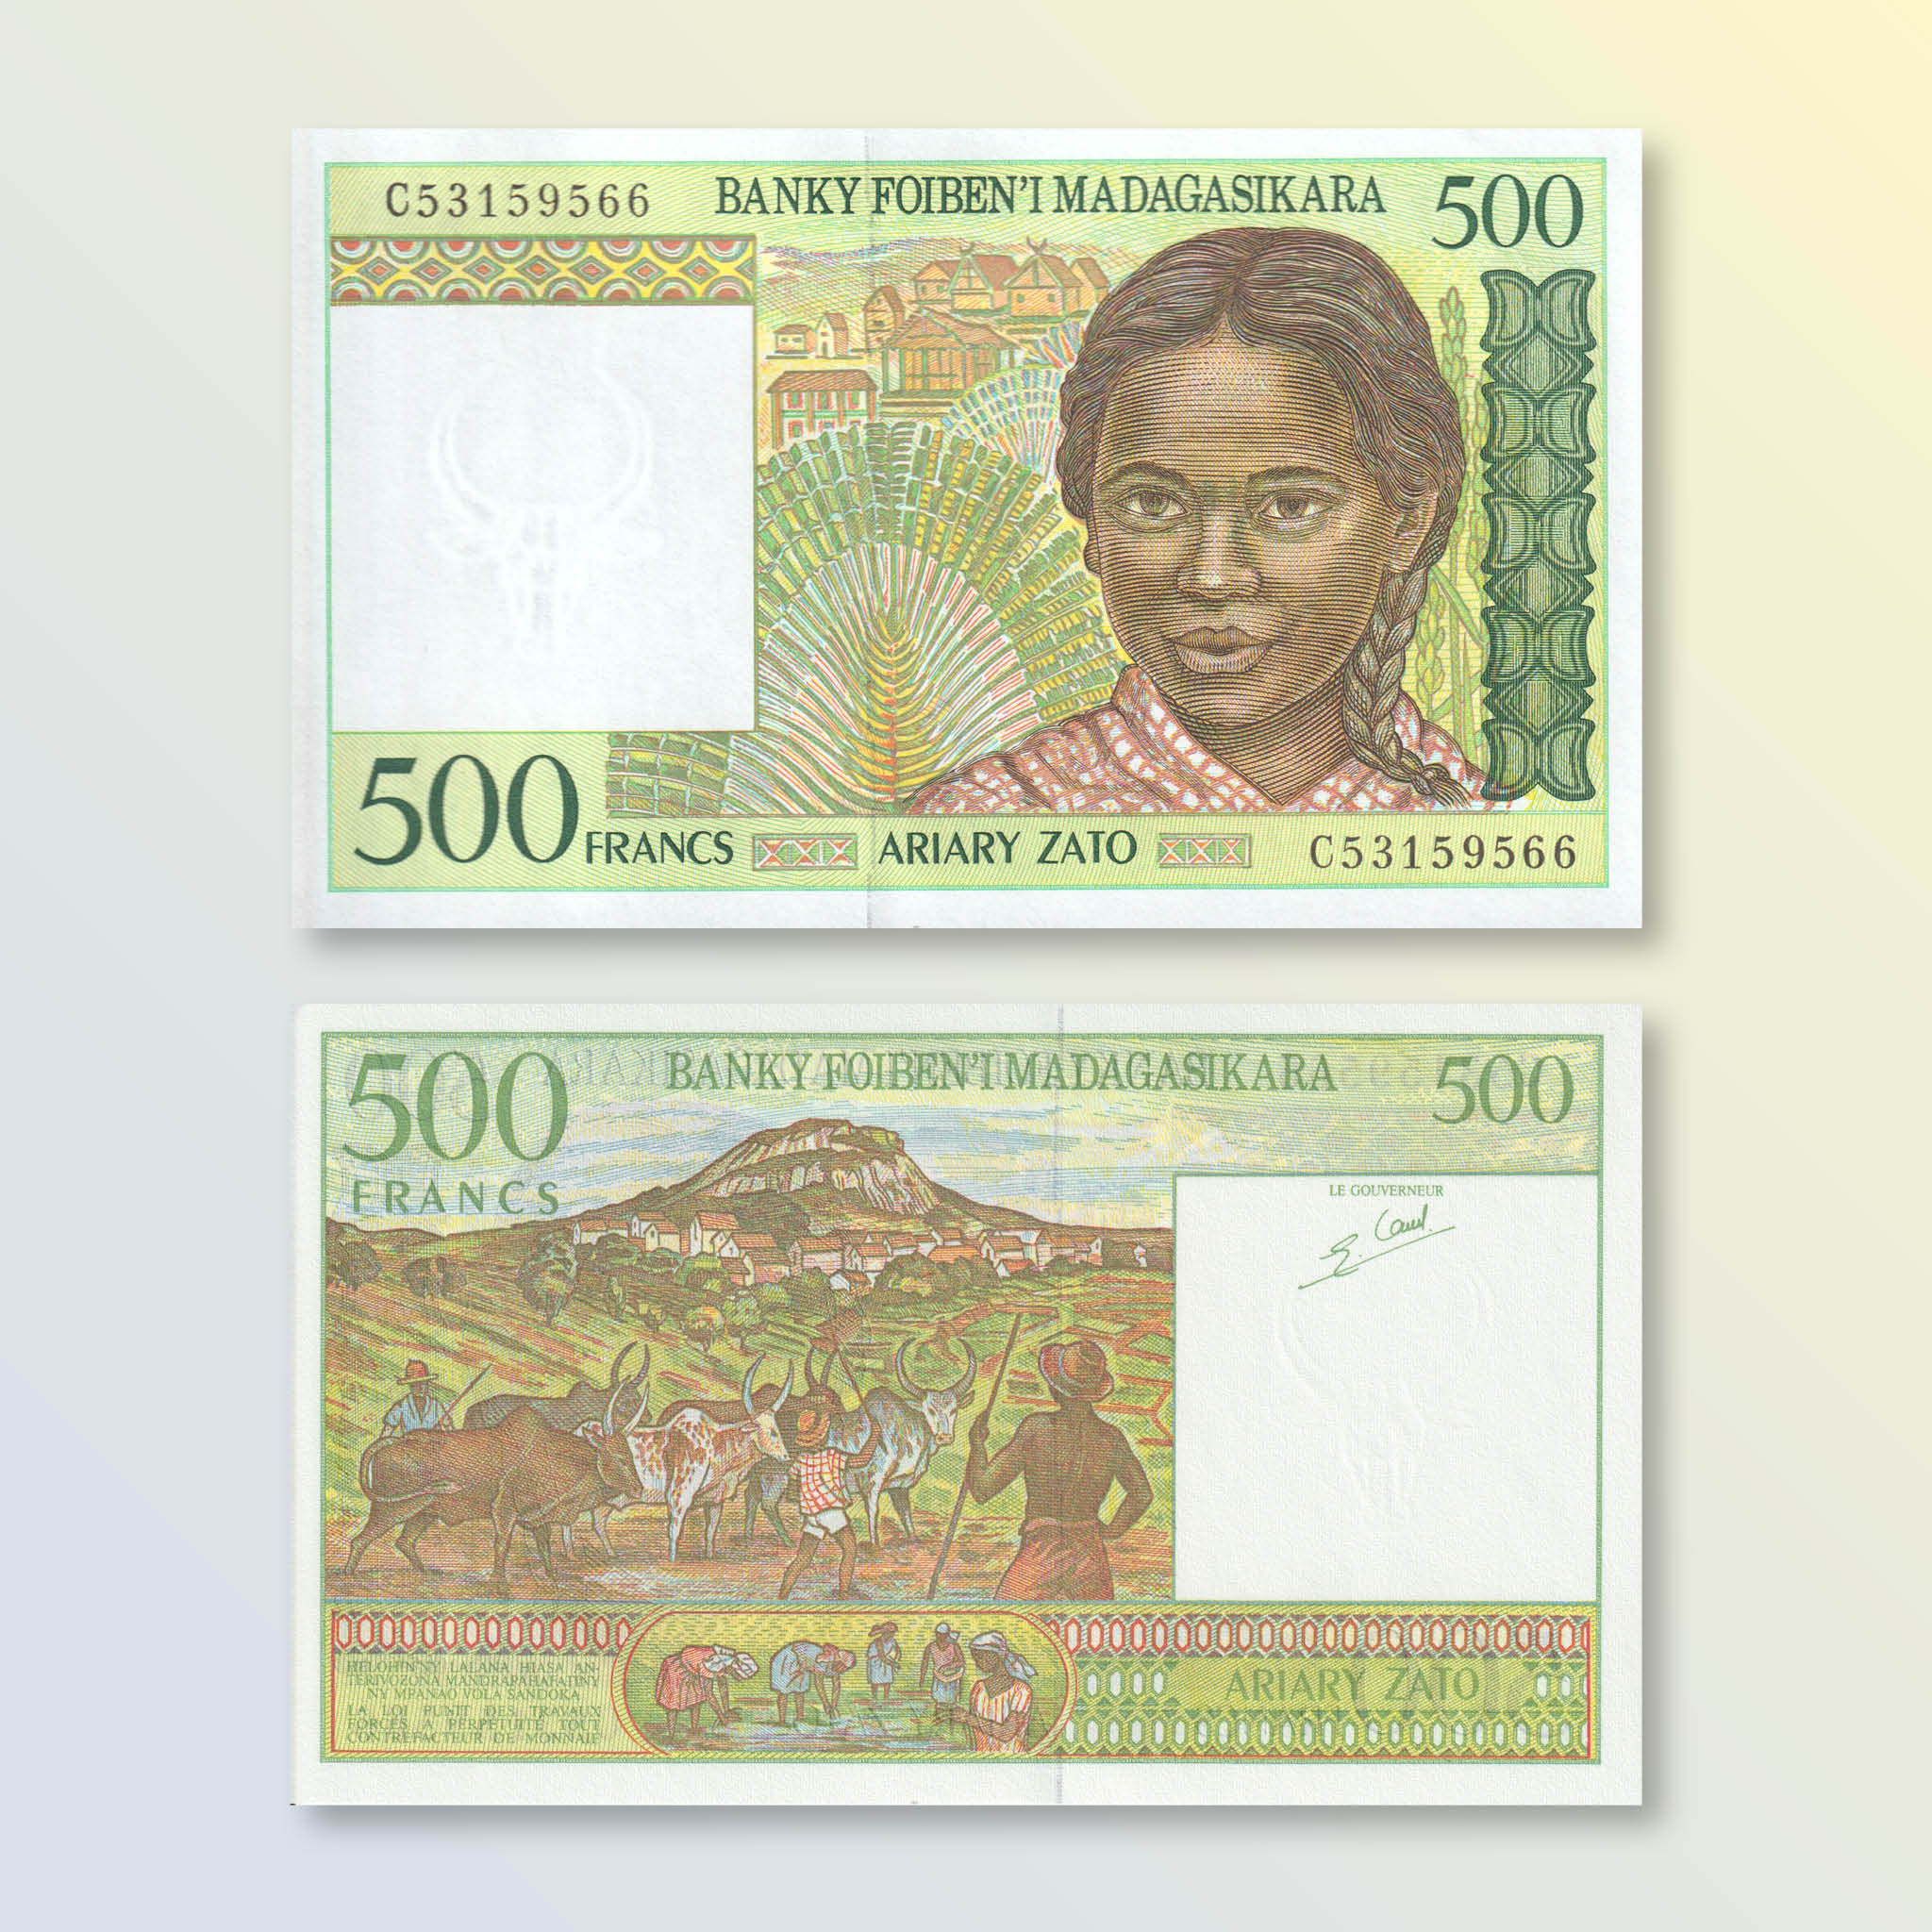 Madagascar 500 Francs, 1994, B311b, P75b, UNC - Robert's World Money - World Banknotes